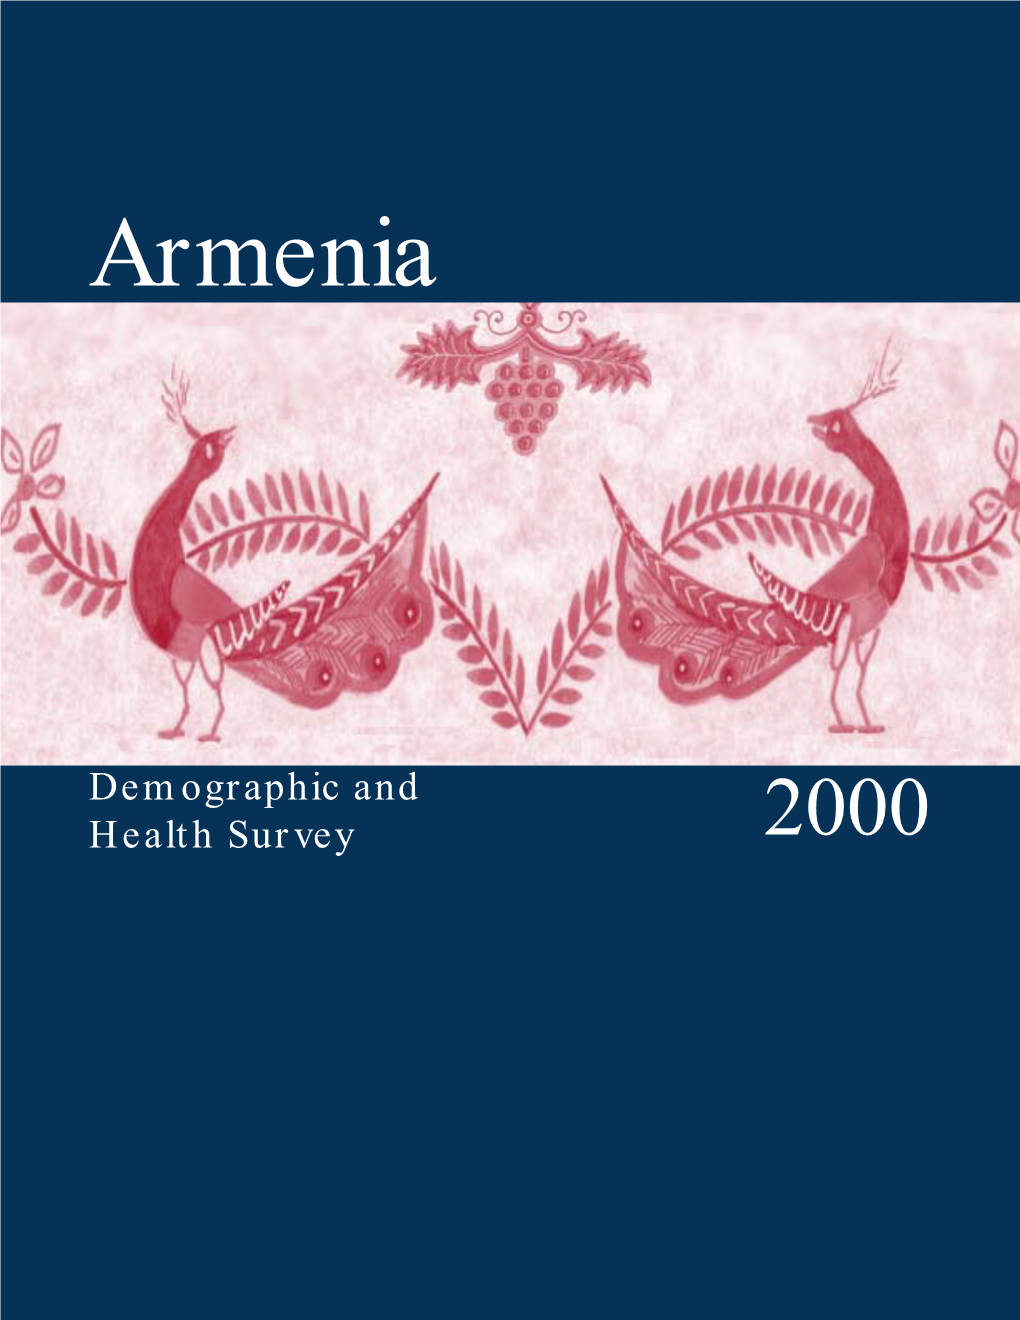 Armenia 2000 Demographic and Health Survey